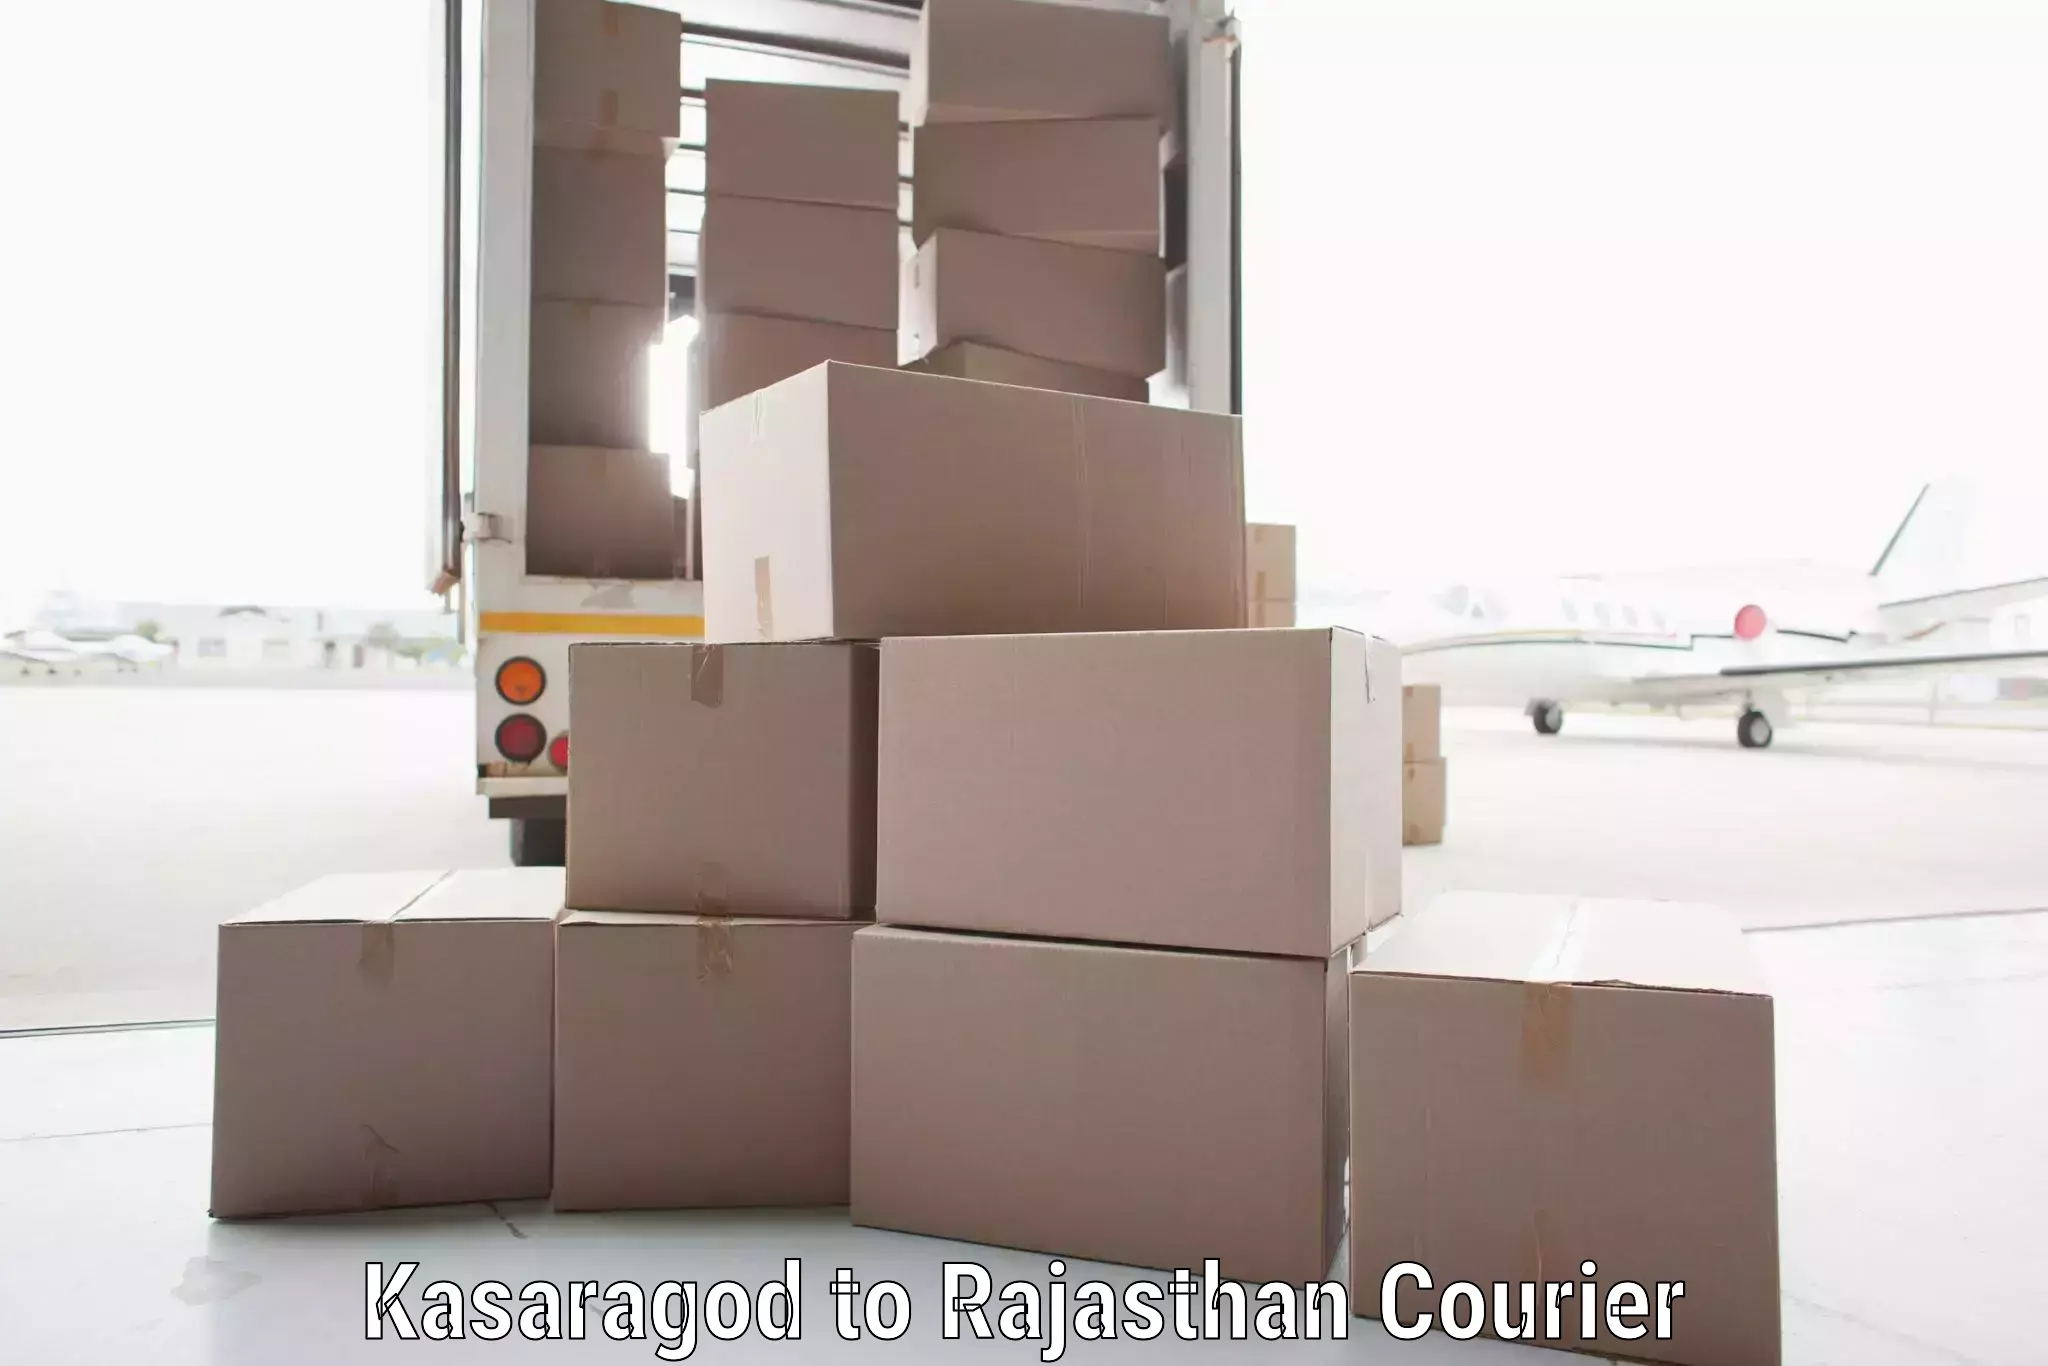 Logistics service provider Kasaragod to Gogunda